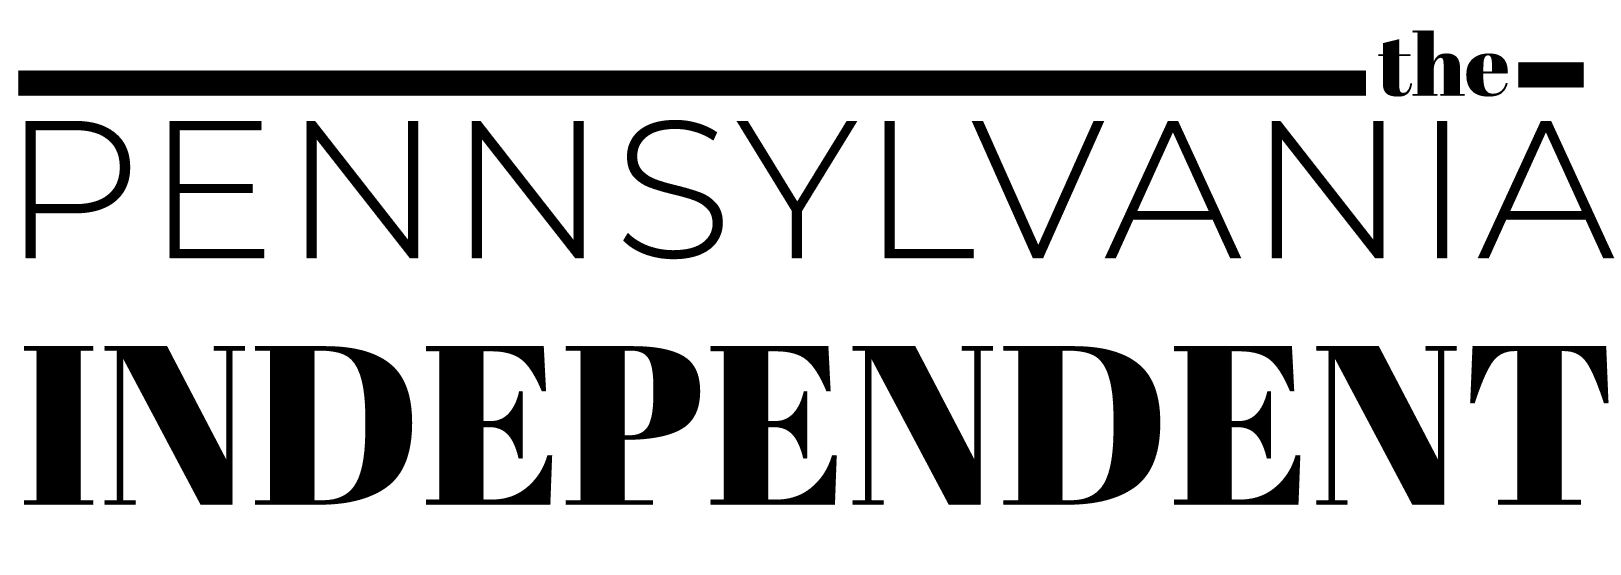 Pennsylvania Independent